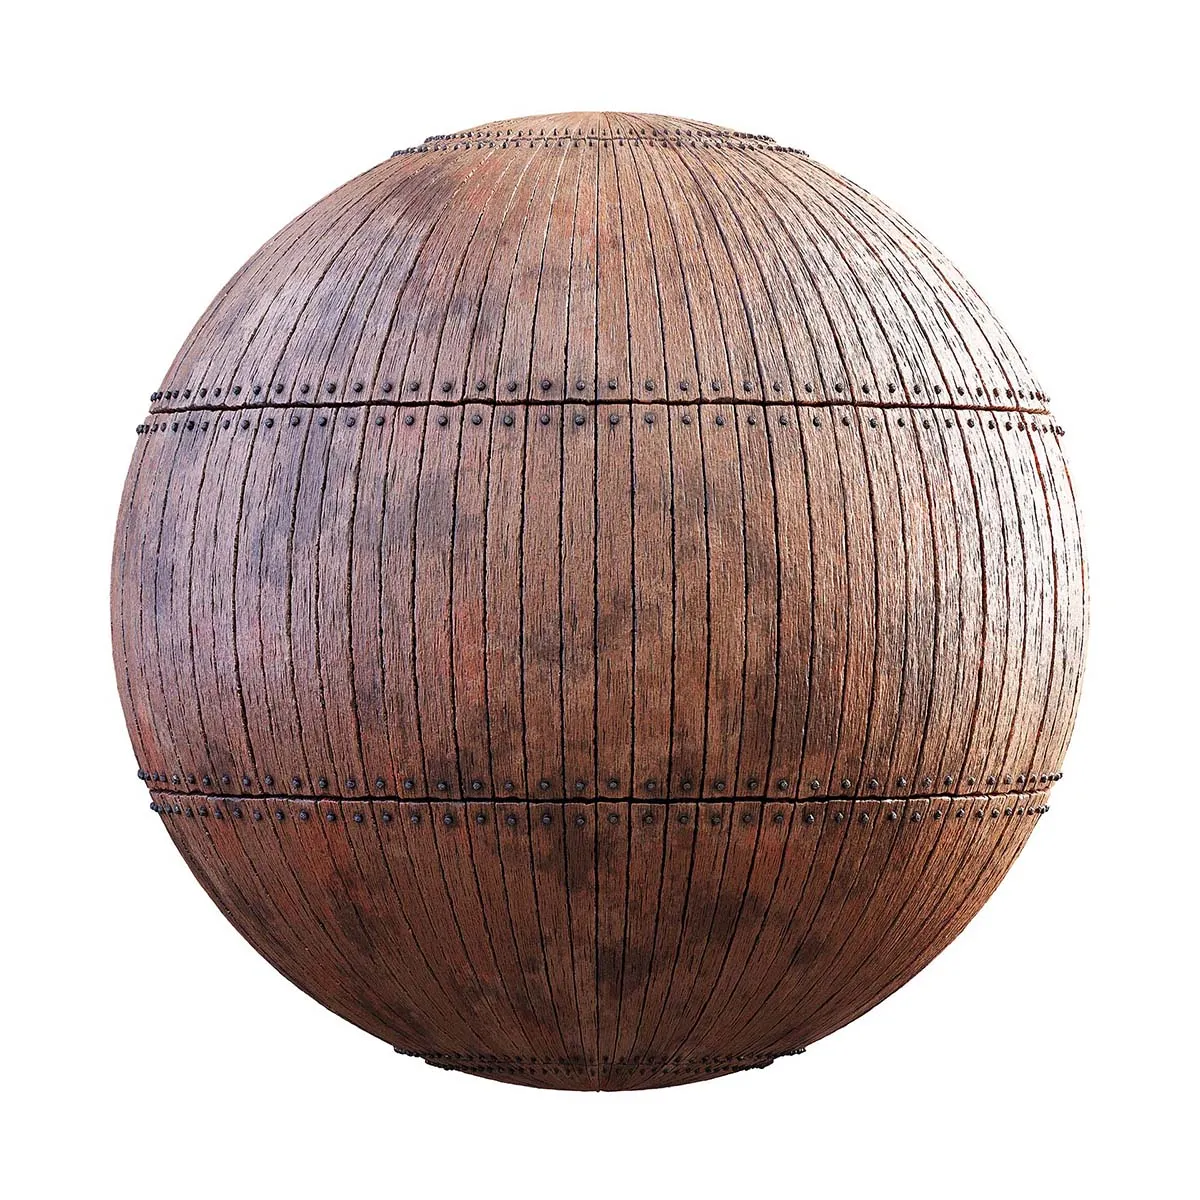 PBR Textures Volume 29 – Medieval – 4K – 8K – wooden_planks_29_75